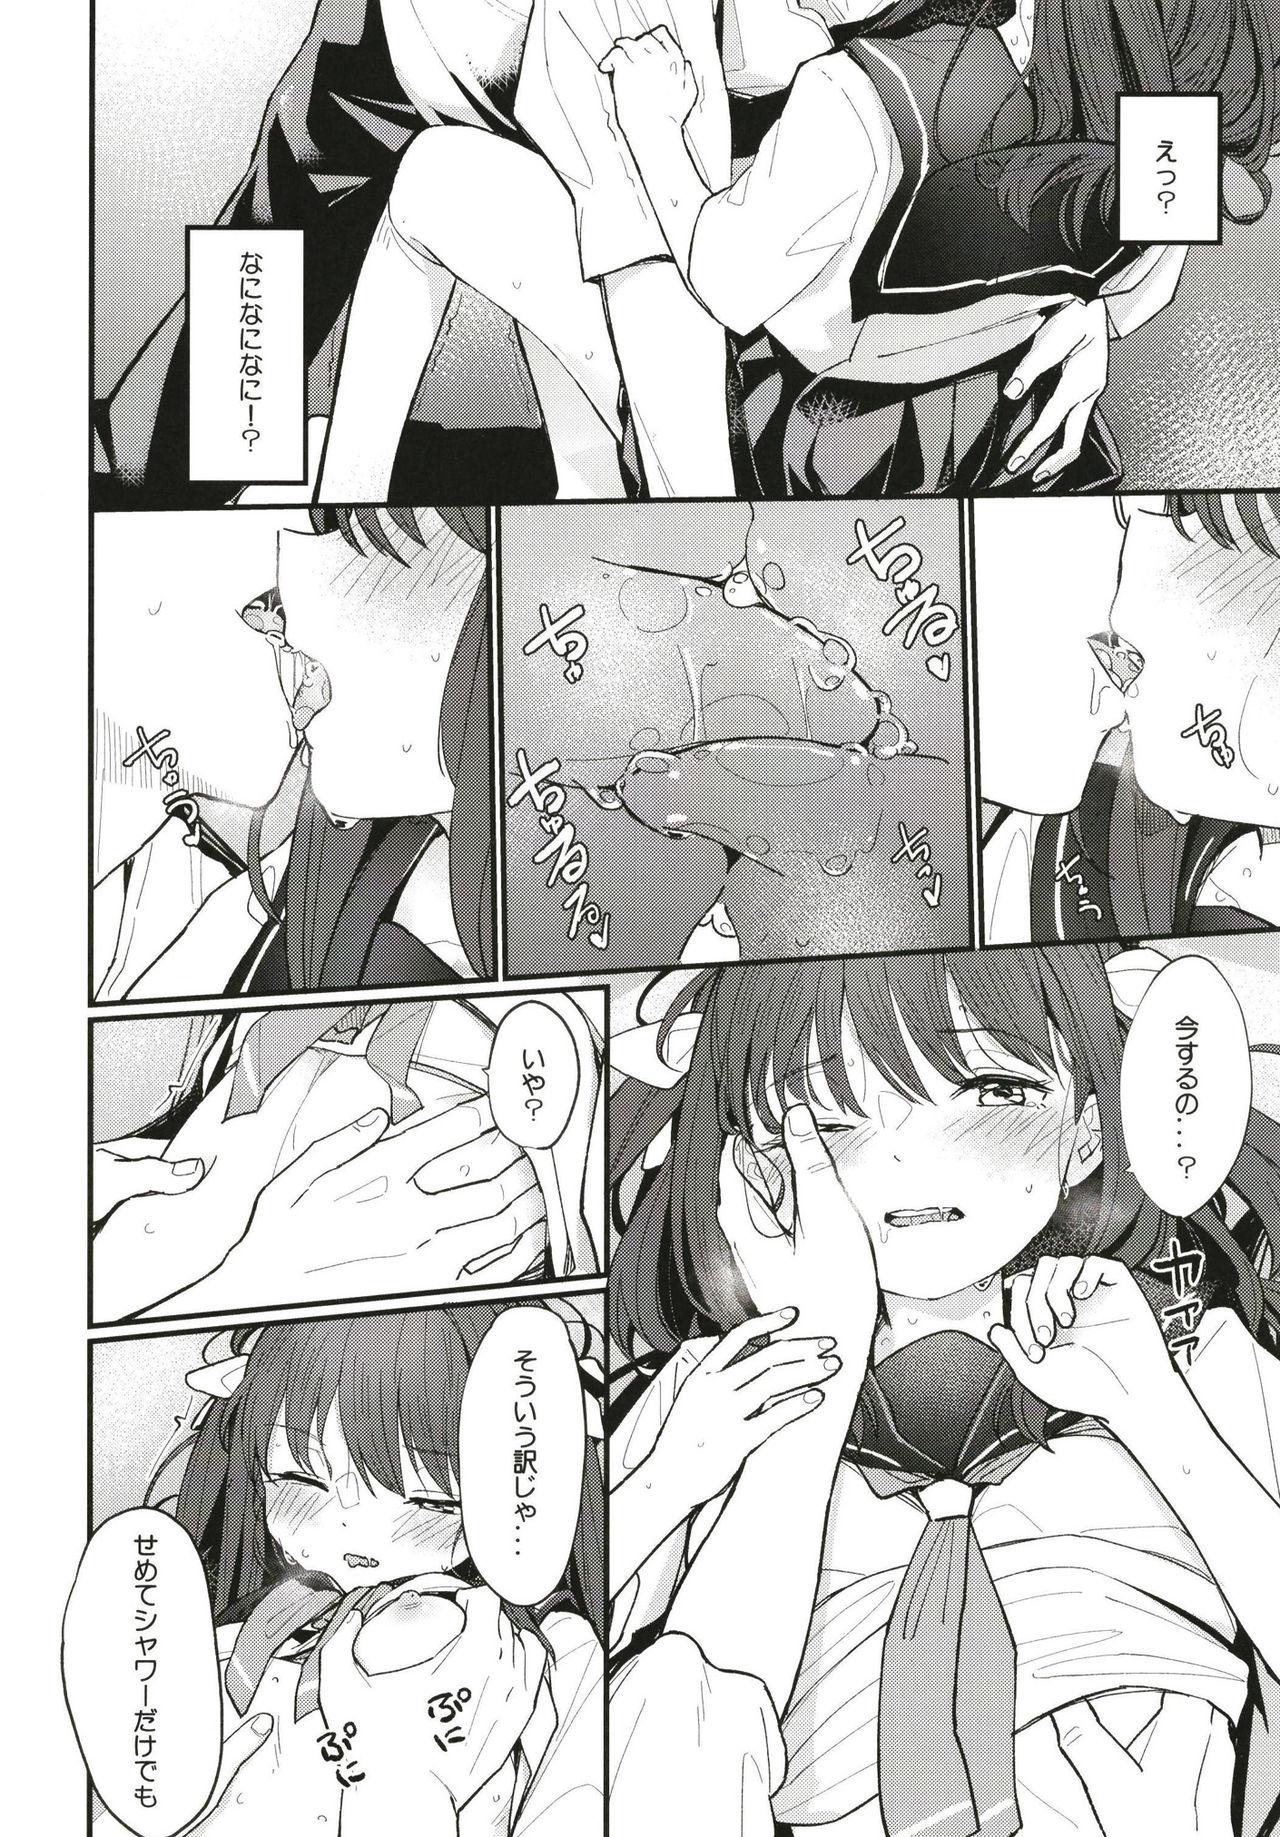 Pickup Onii-chan wa mada Natsuyasumichuu dakara Sex Shitemita - Original Yanks Featured - Page 7